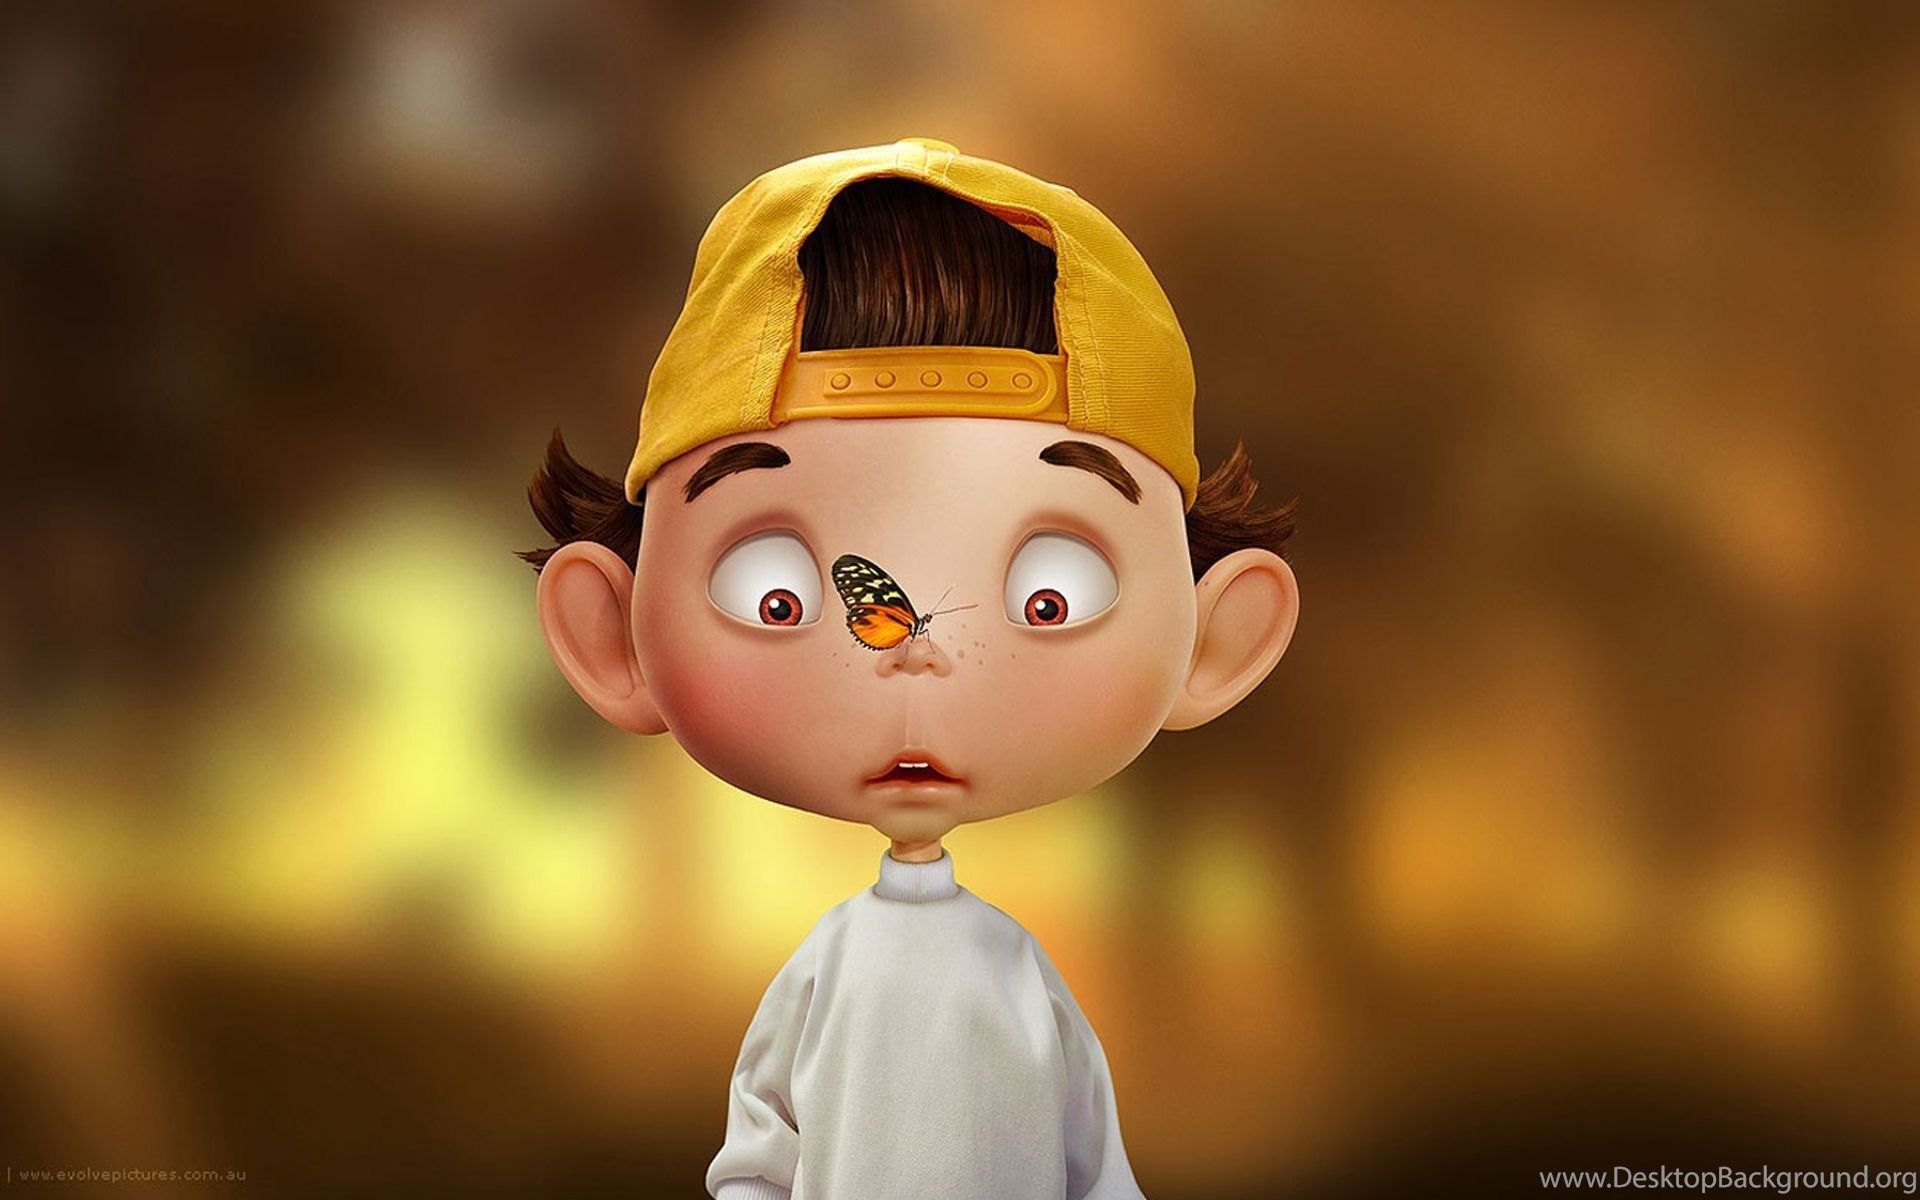 Download 3D Boys Cartoon Animation Wallpaper HD Desktop Mobile. Desktop Background